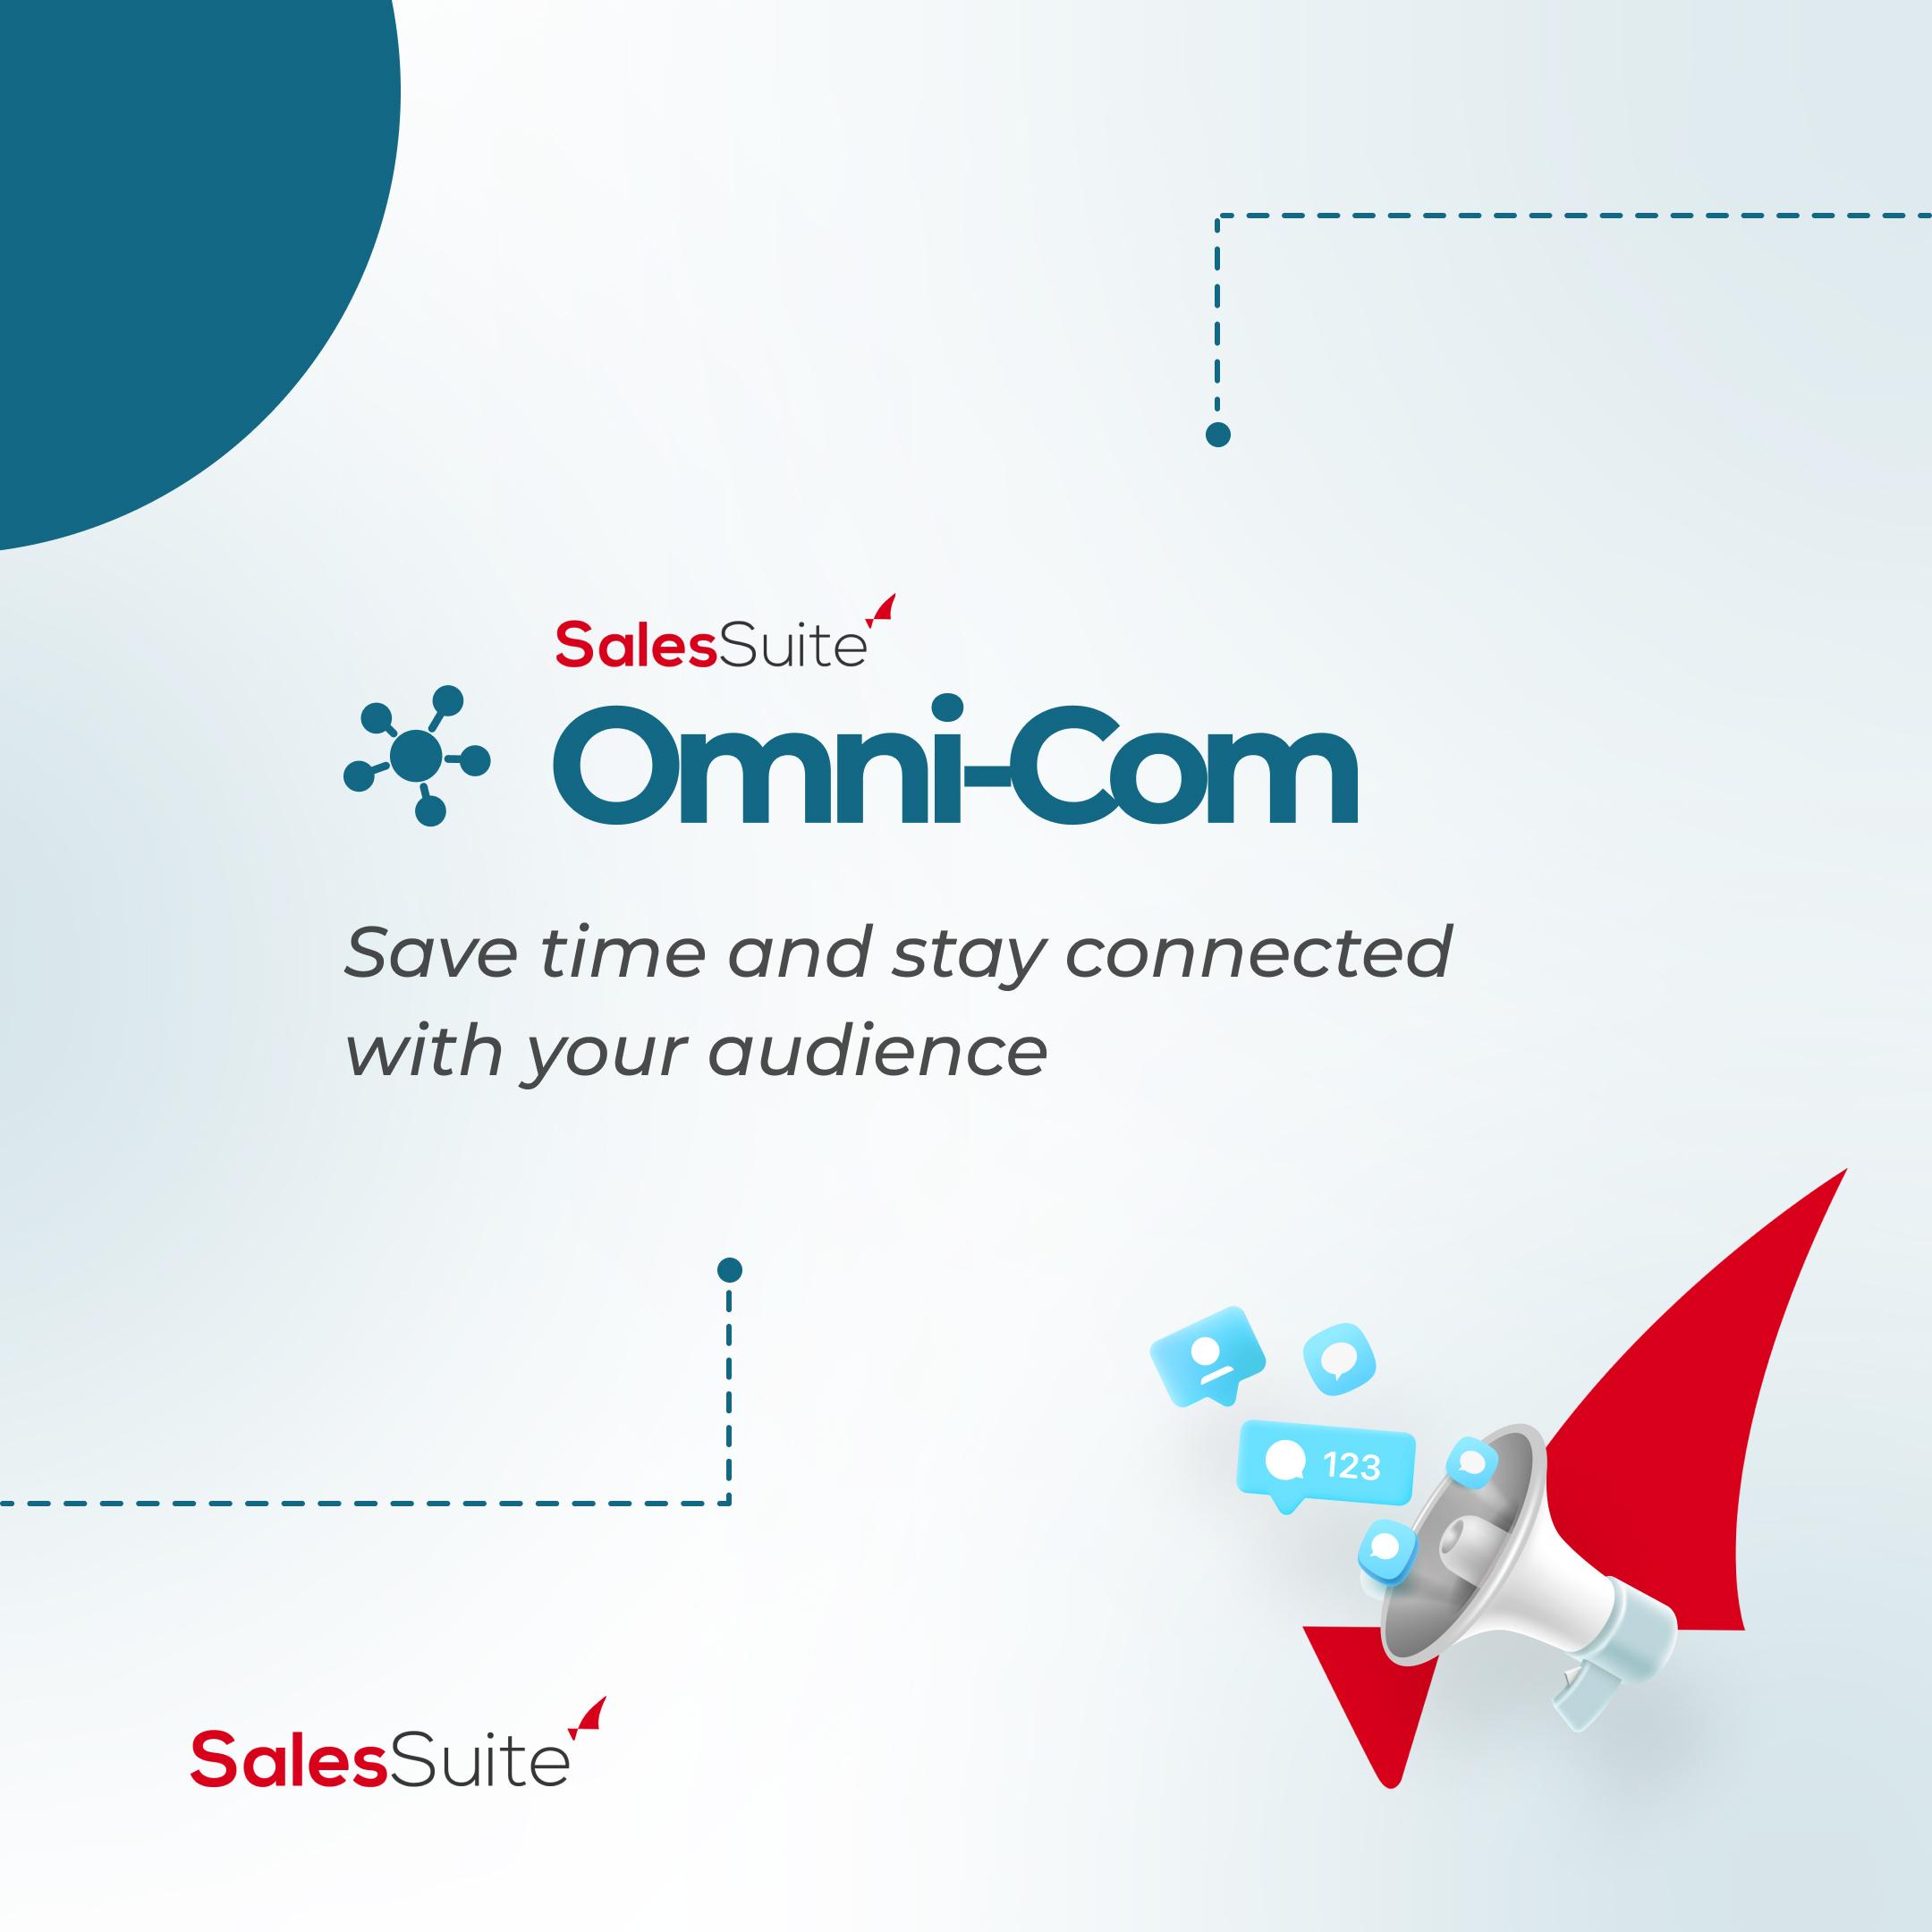 SalesSuite Omni-Com: Extensive Guide